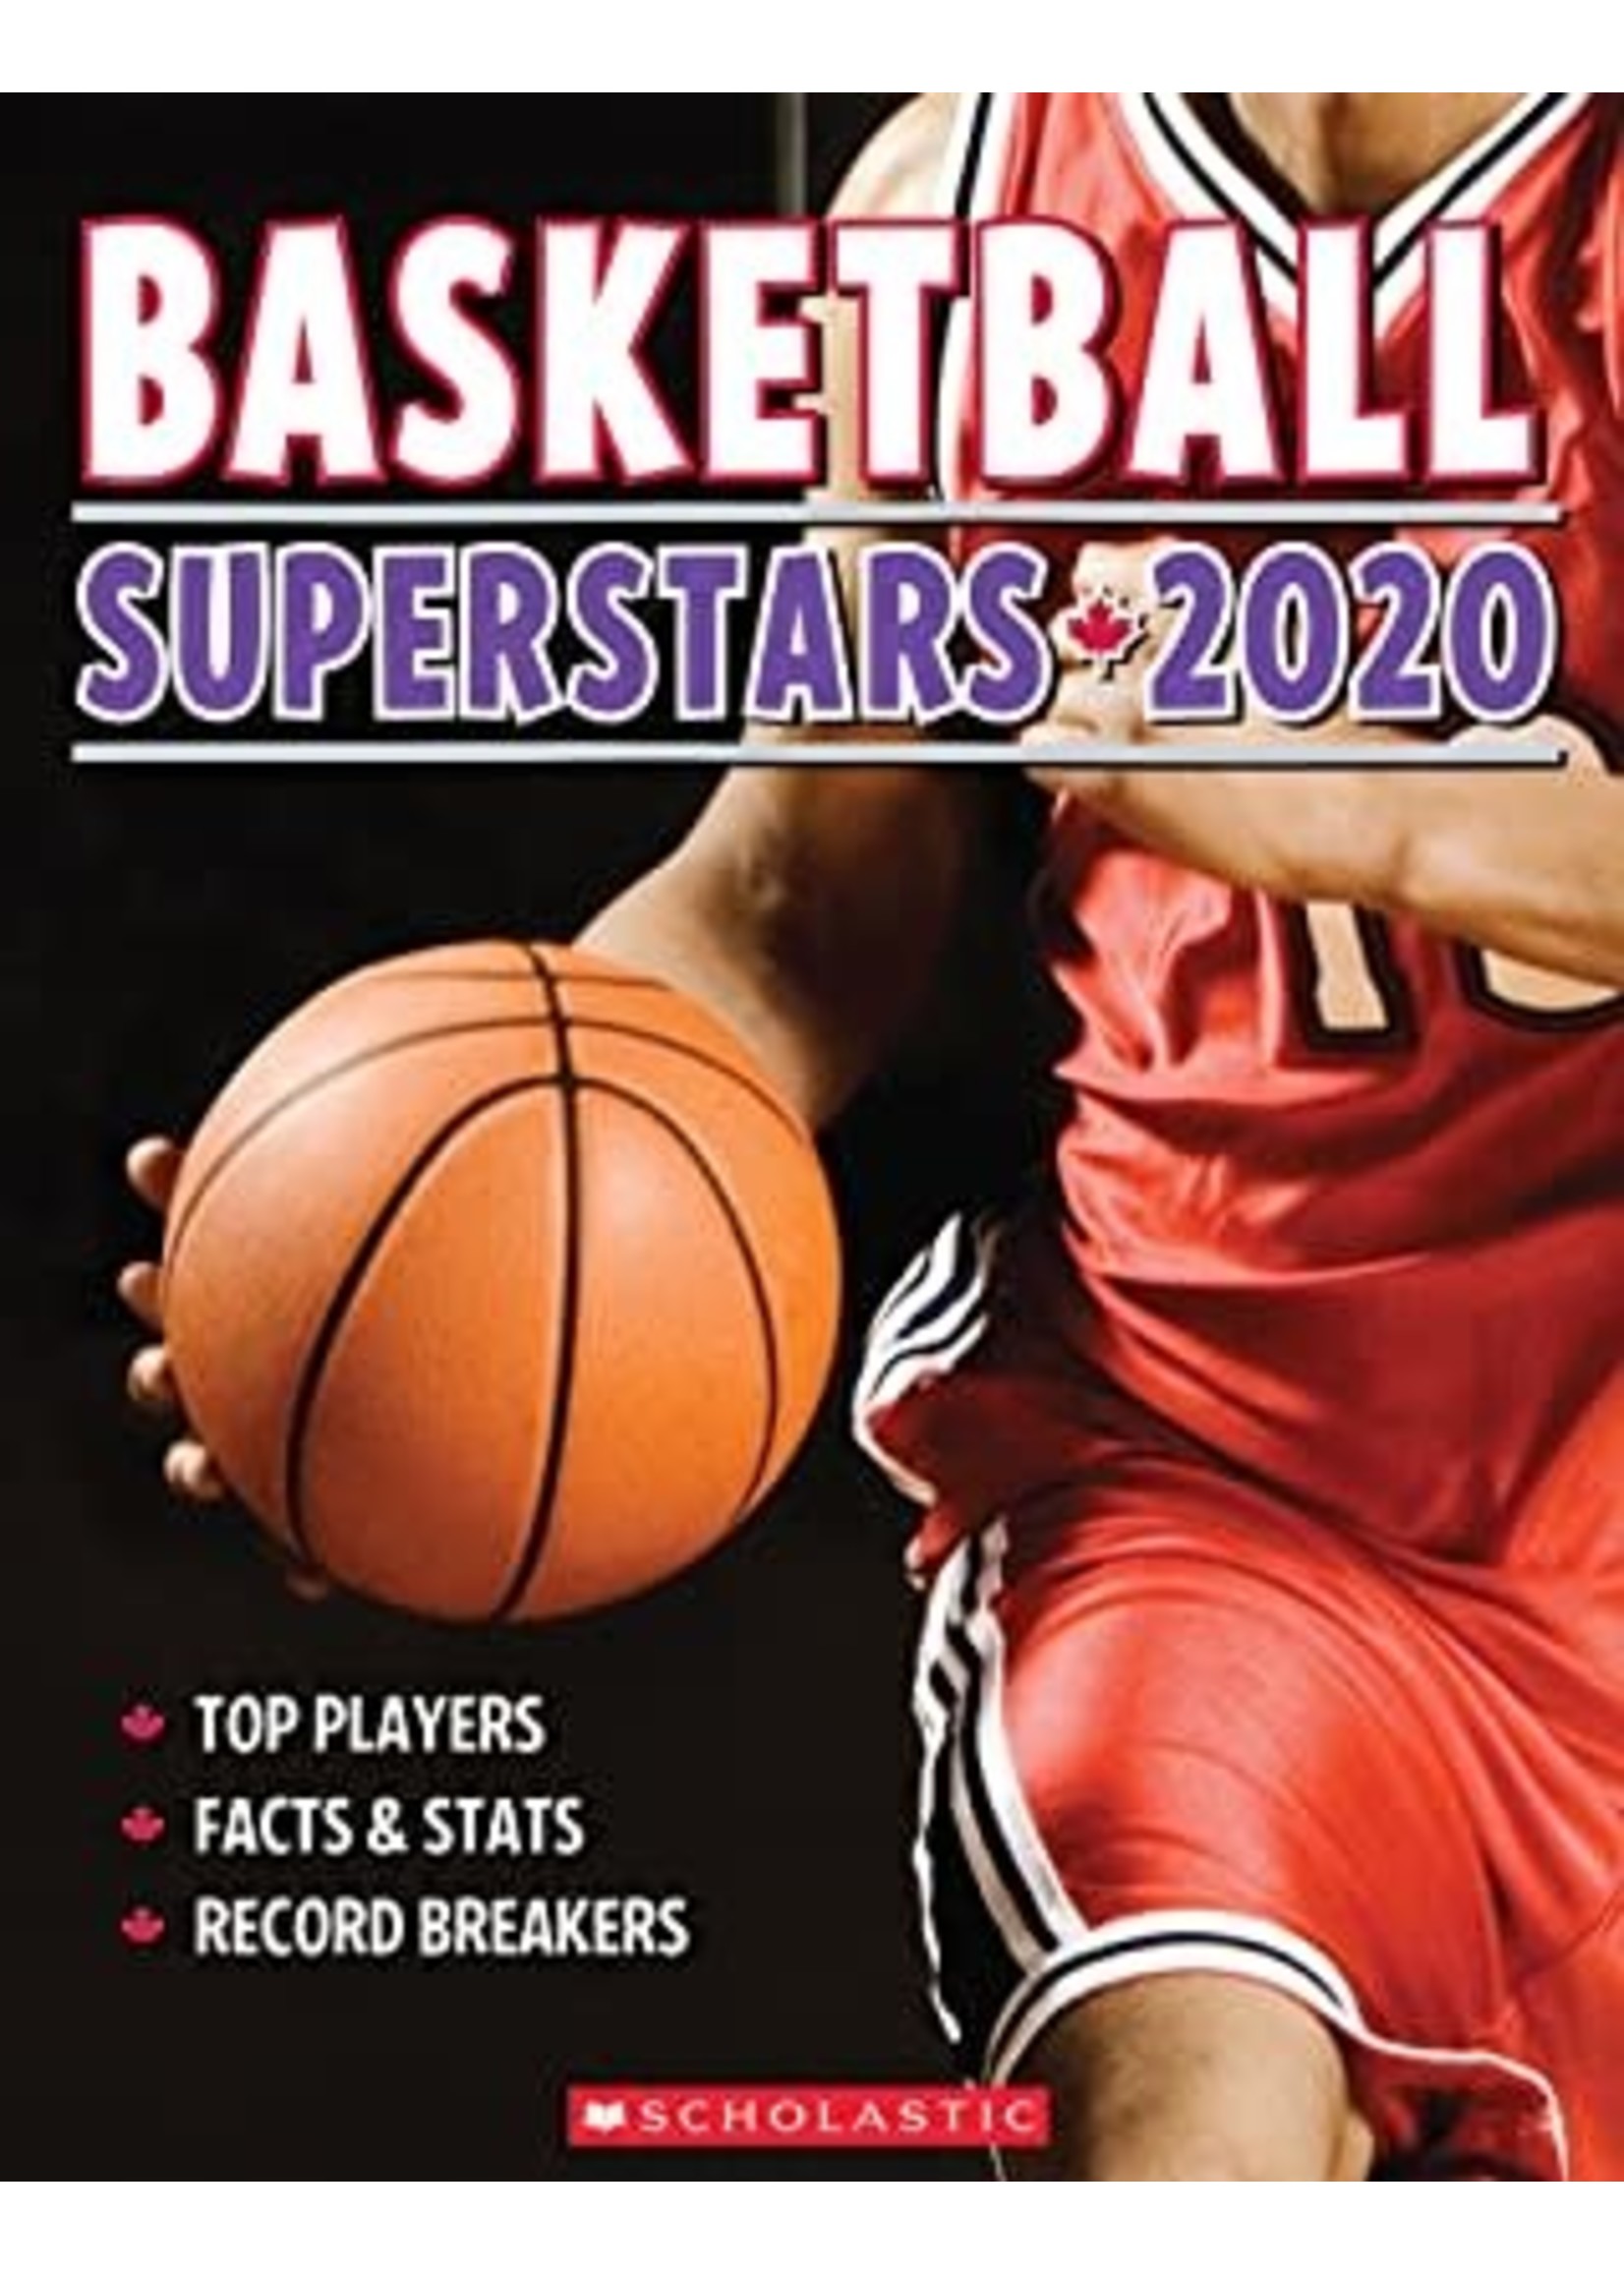 Basketball Superstars 2020 by K.C. Kelley